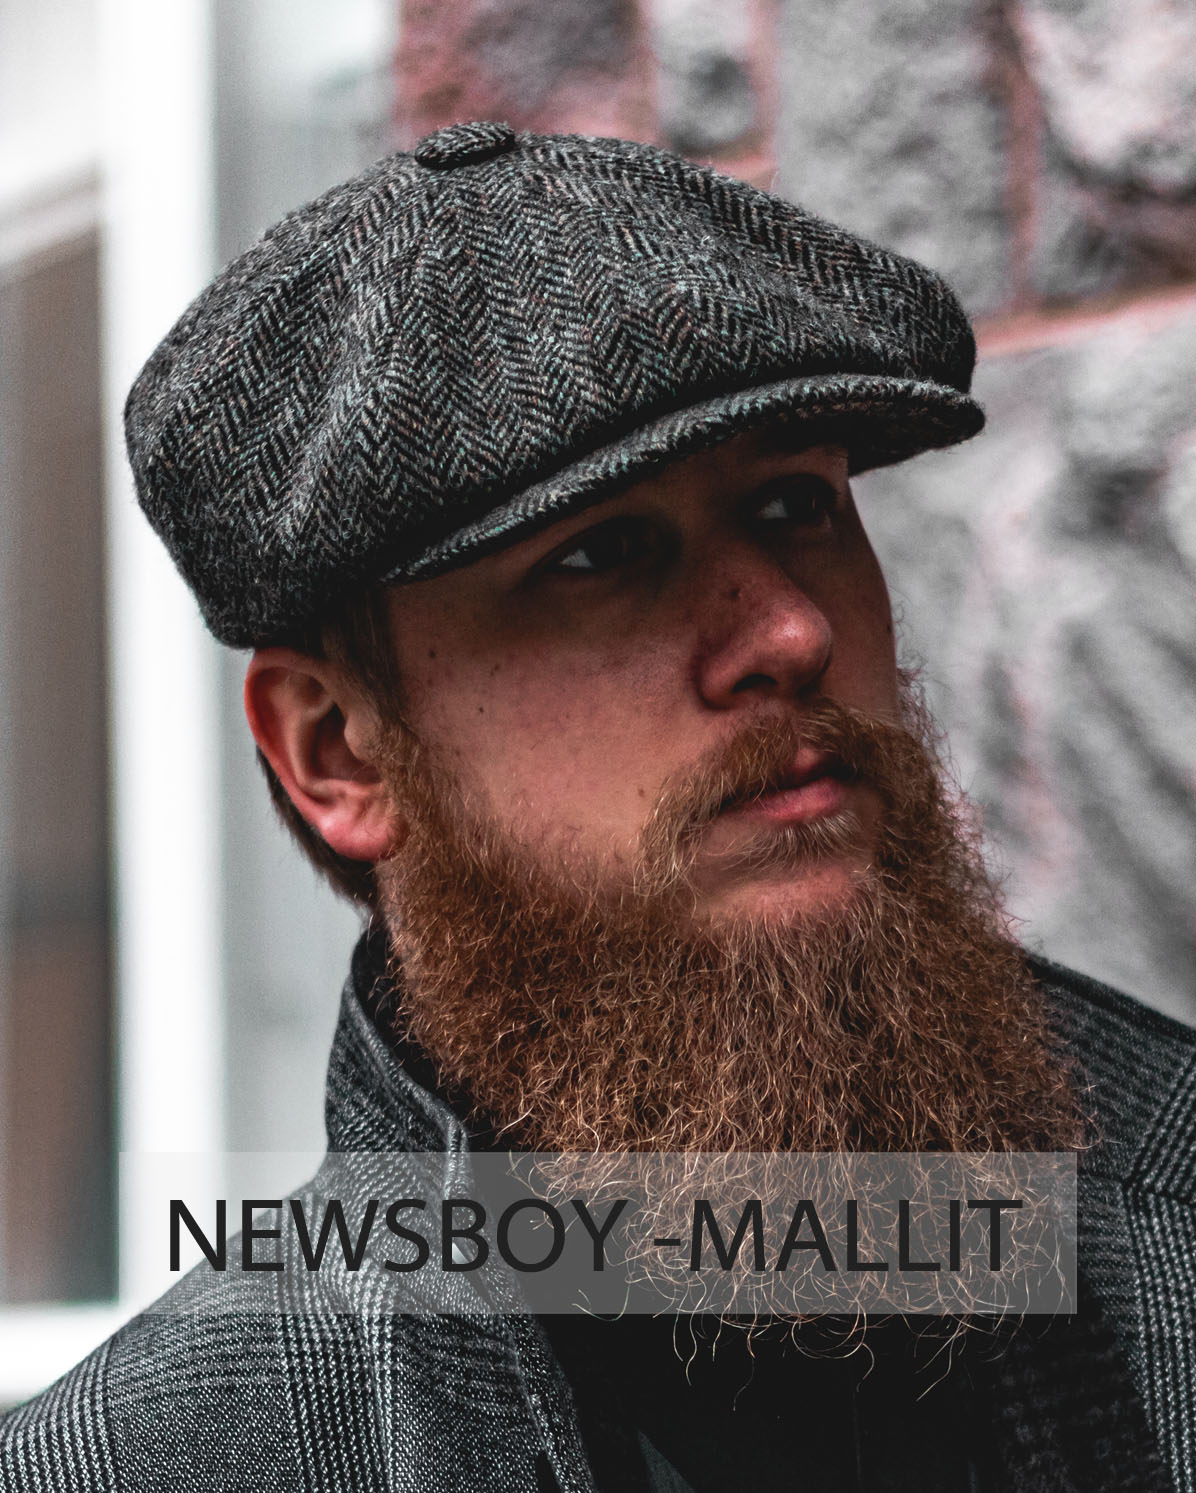 Newsboy-mallit